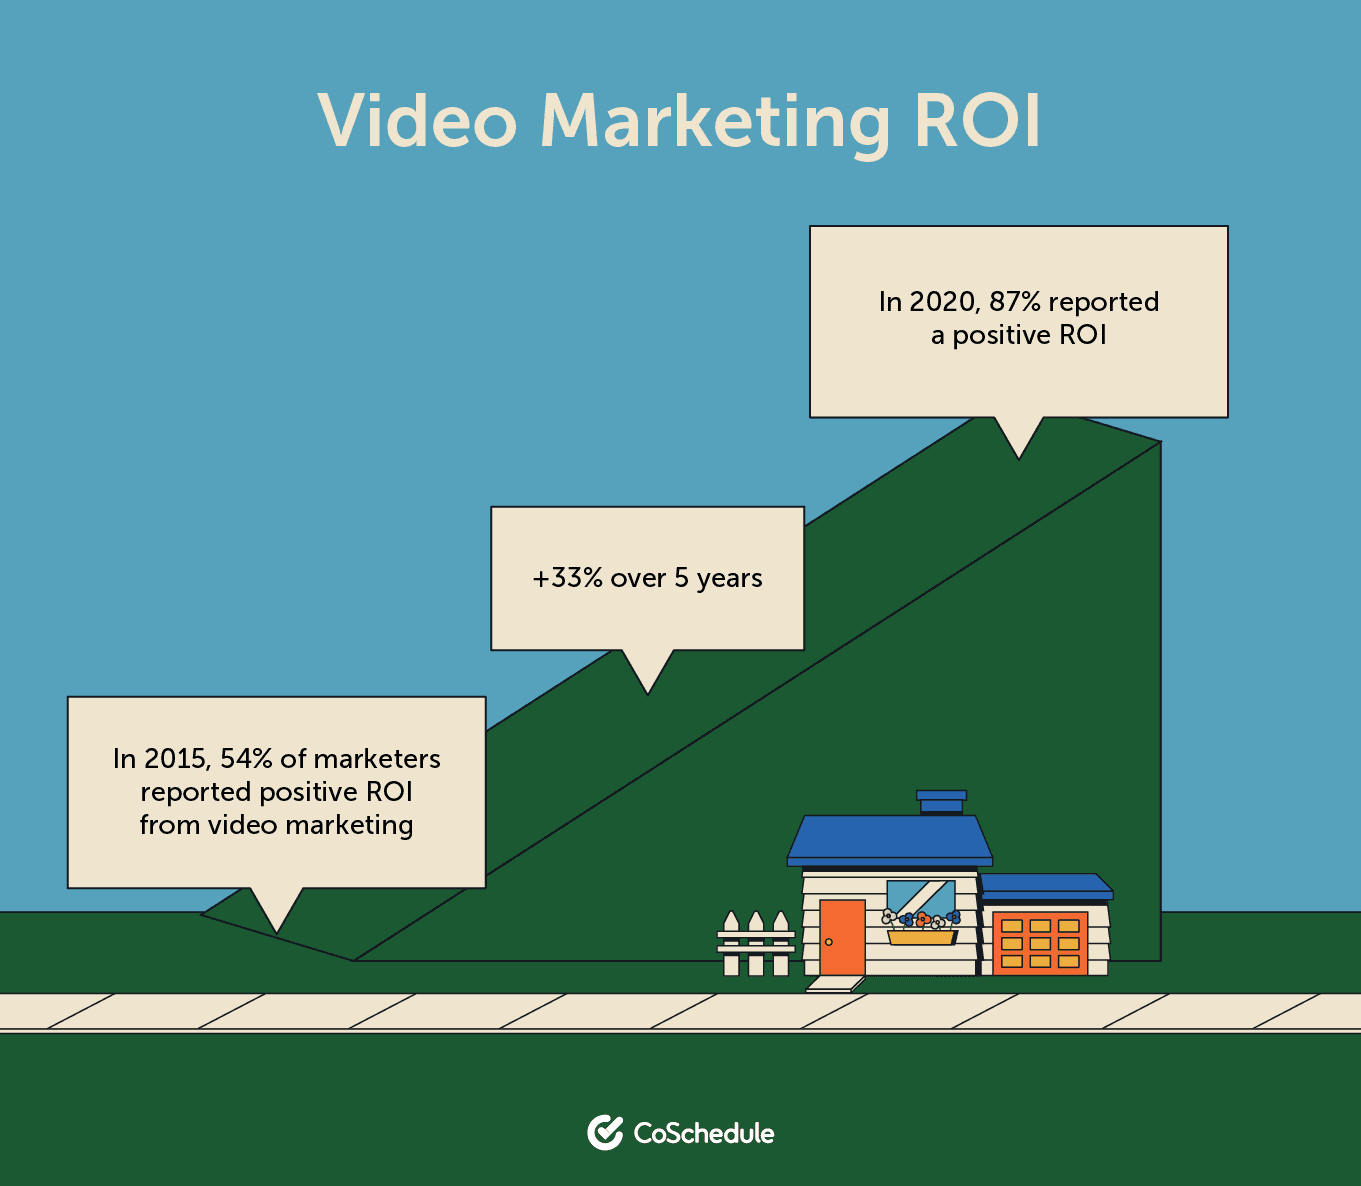 Video marketing ROI has increased